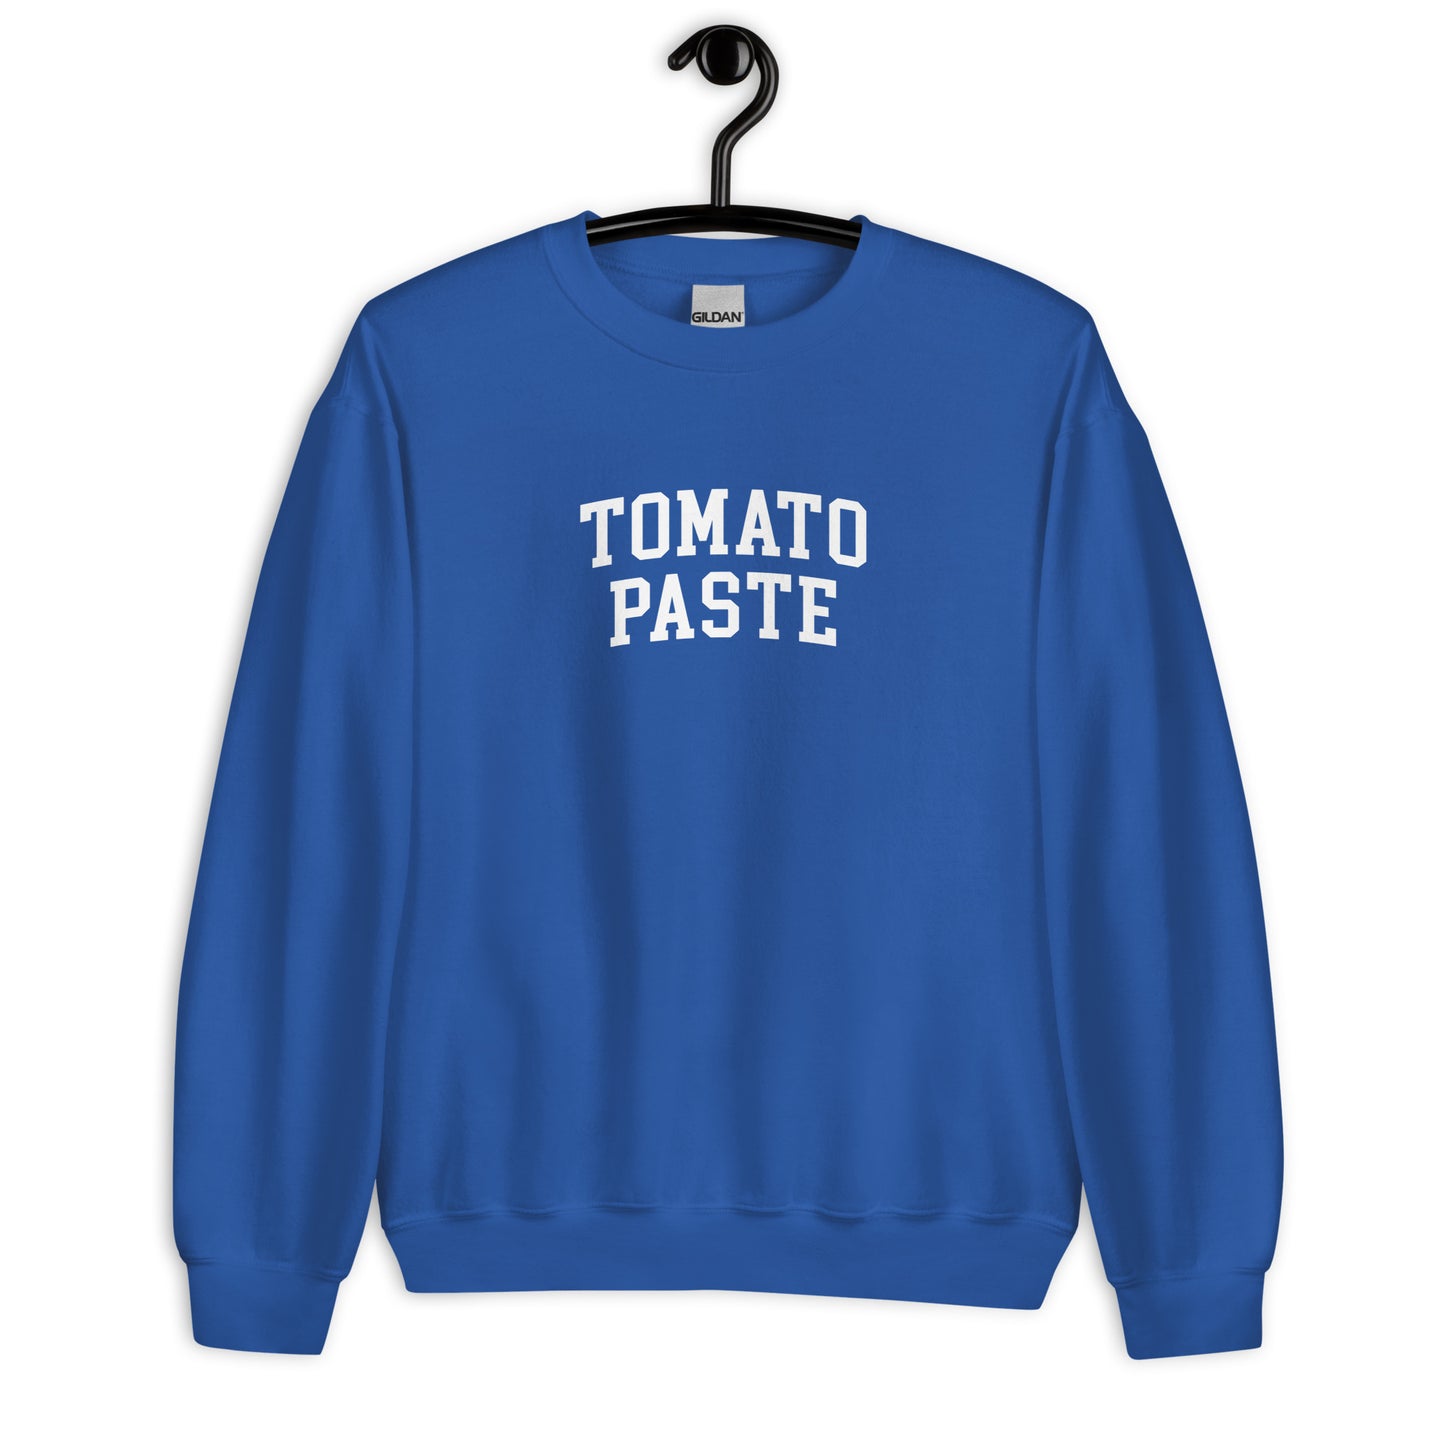 Tomato Paste Sweatshirt - Arched Font